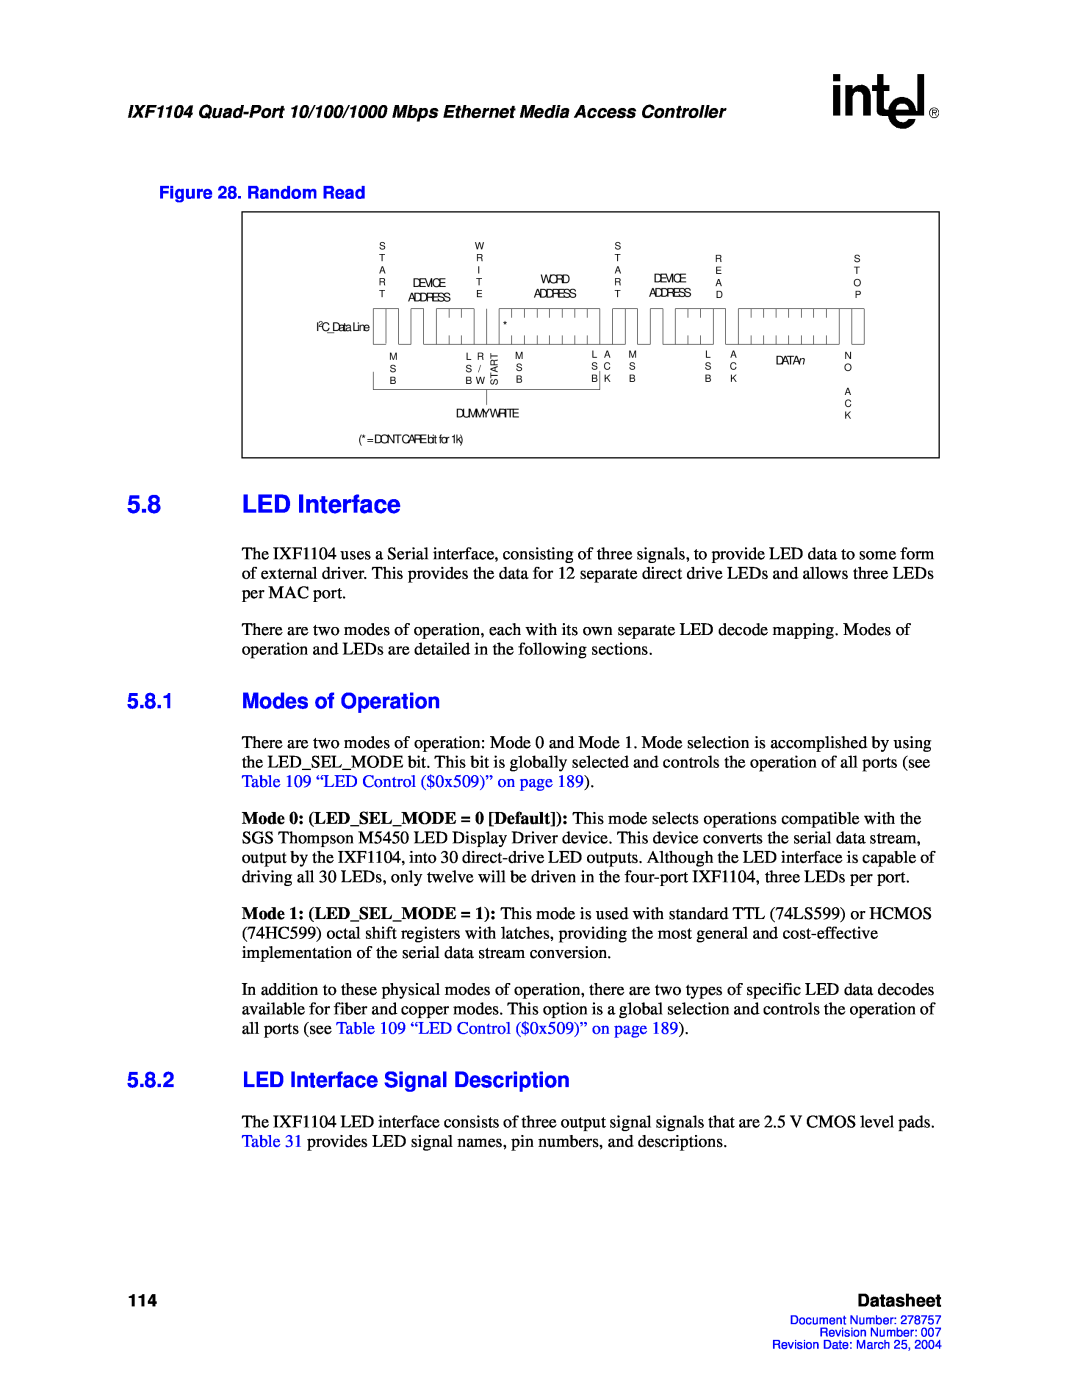 Intel IXF1104 manual 5.8LED Interface, 5.8.1Modes of Operation, 5.8.2LED Interface Signal Description, Datasheet 